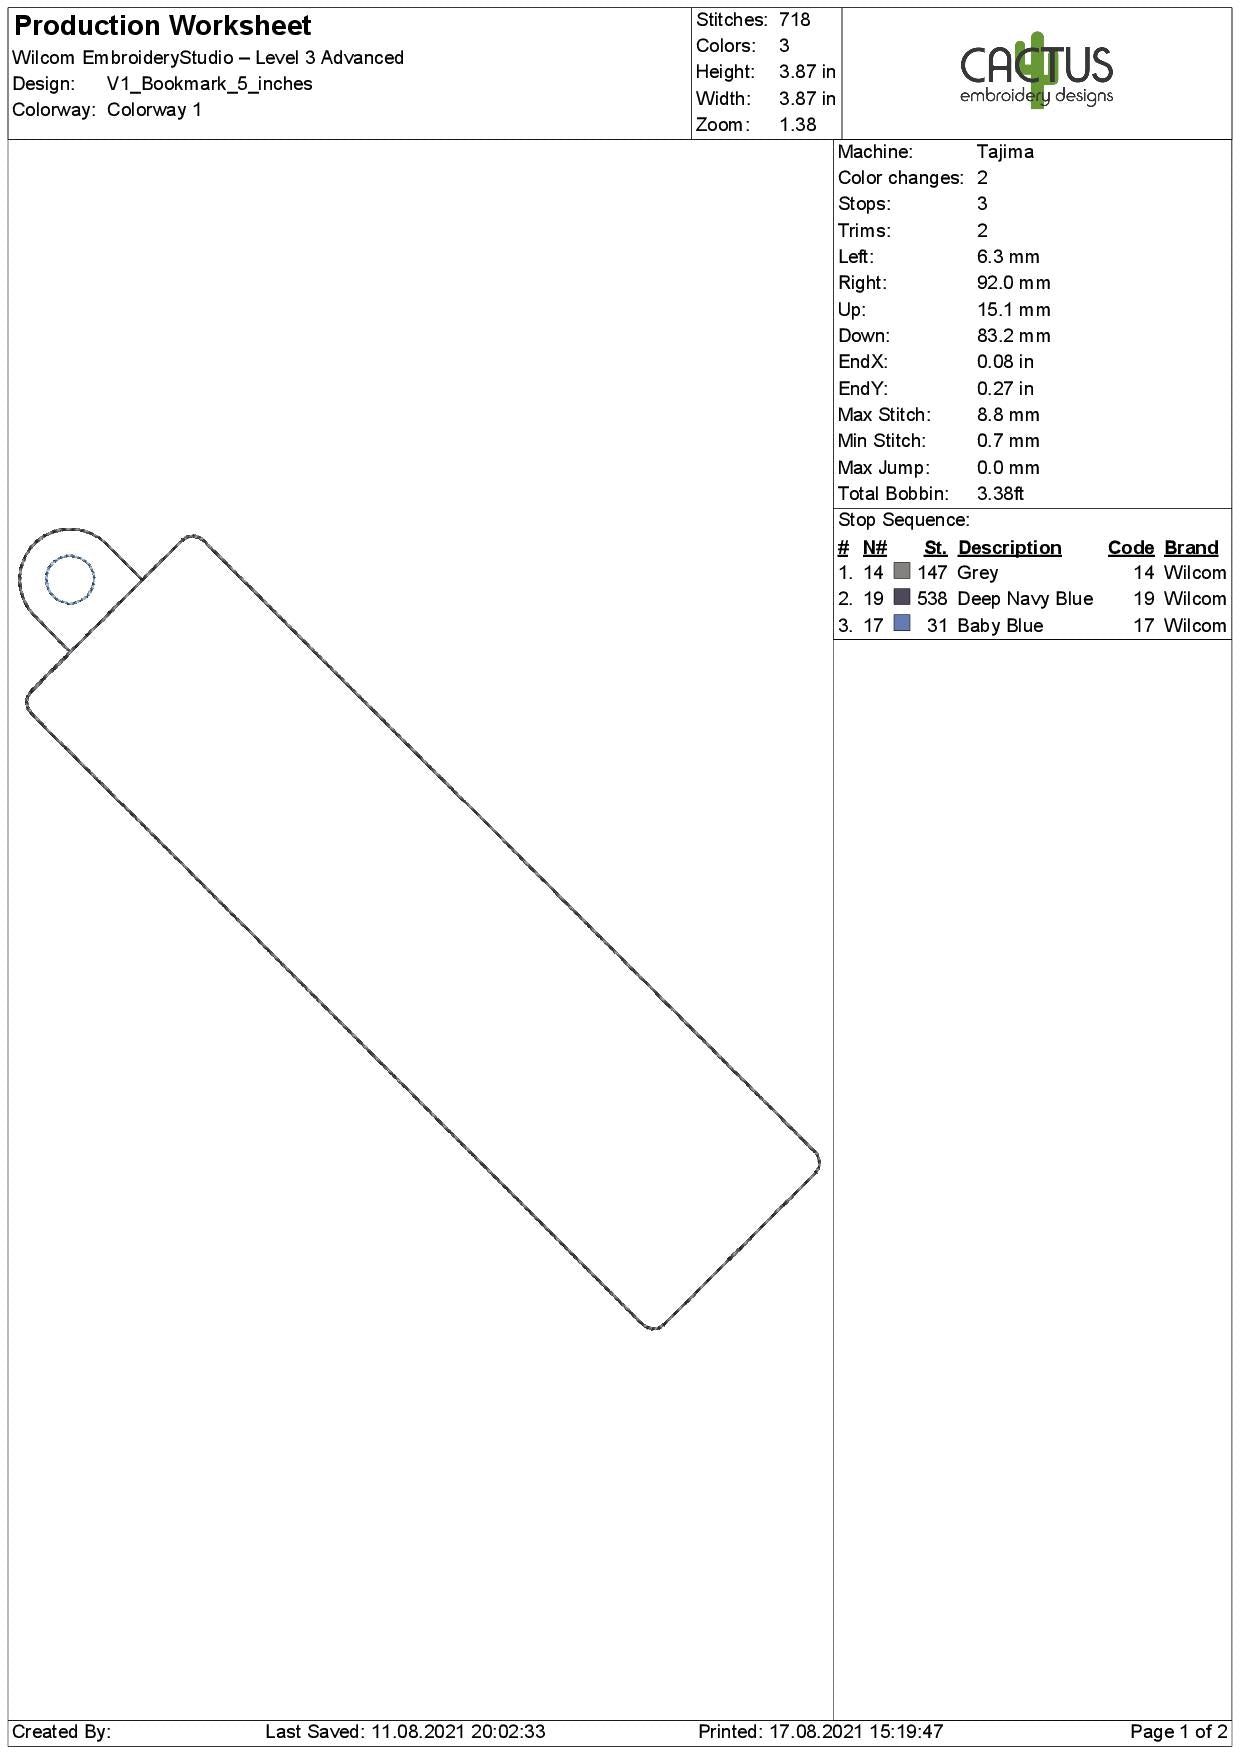 Blank Bookmark Design V1